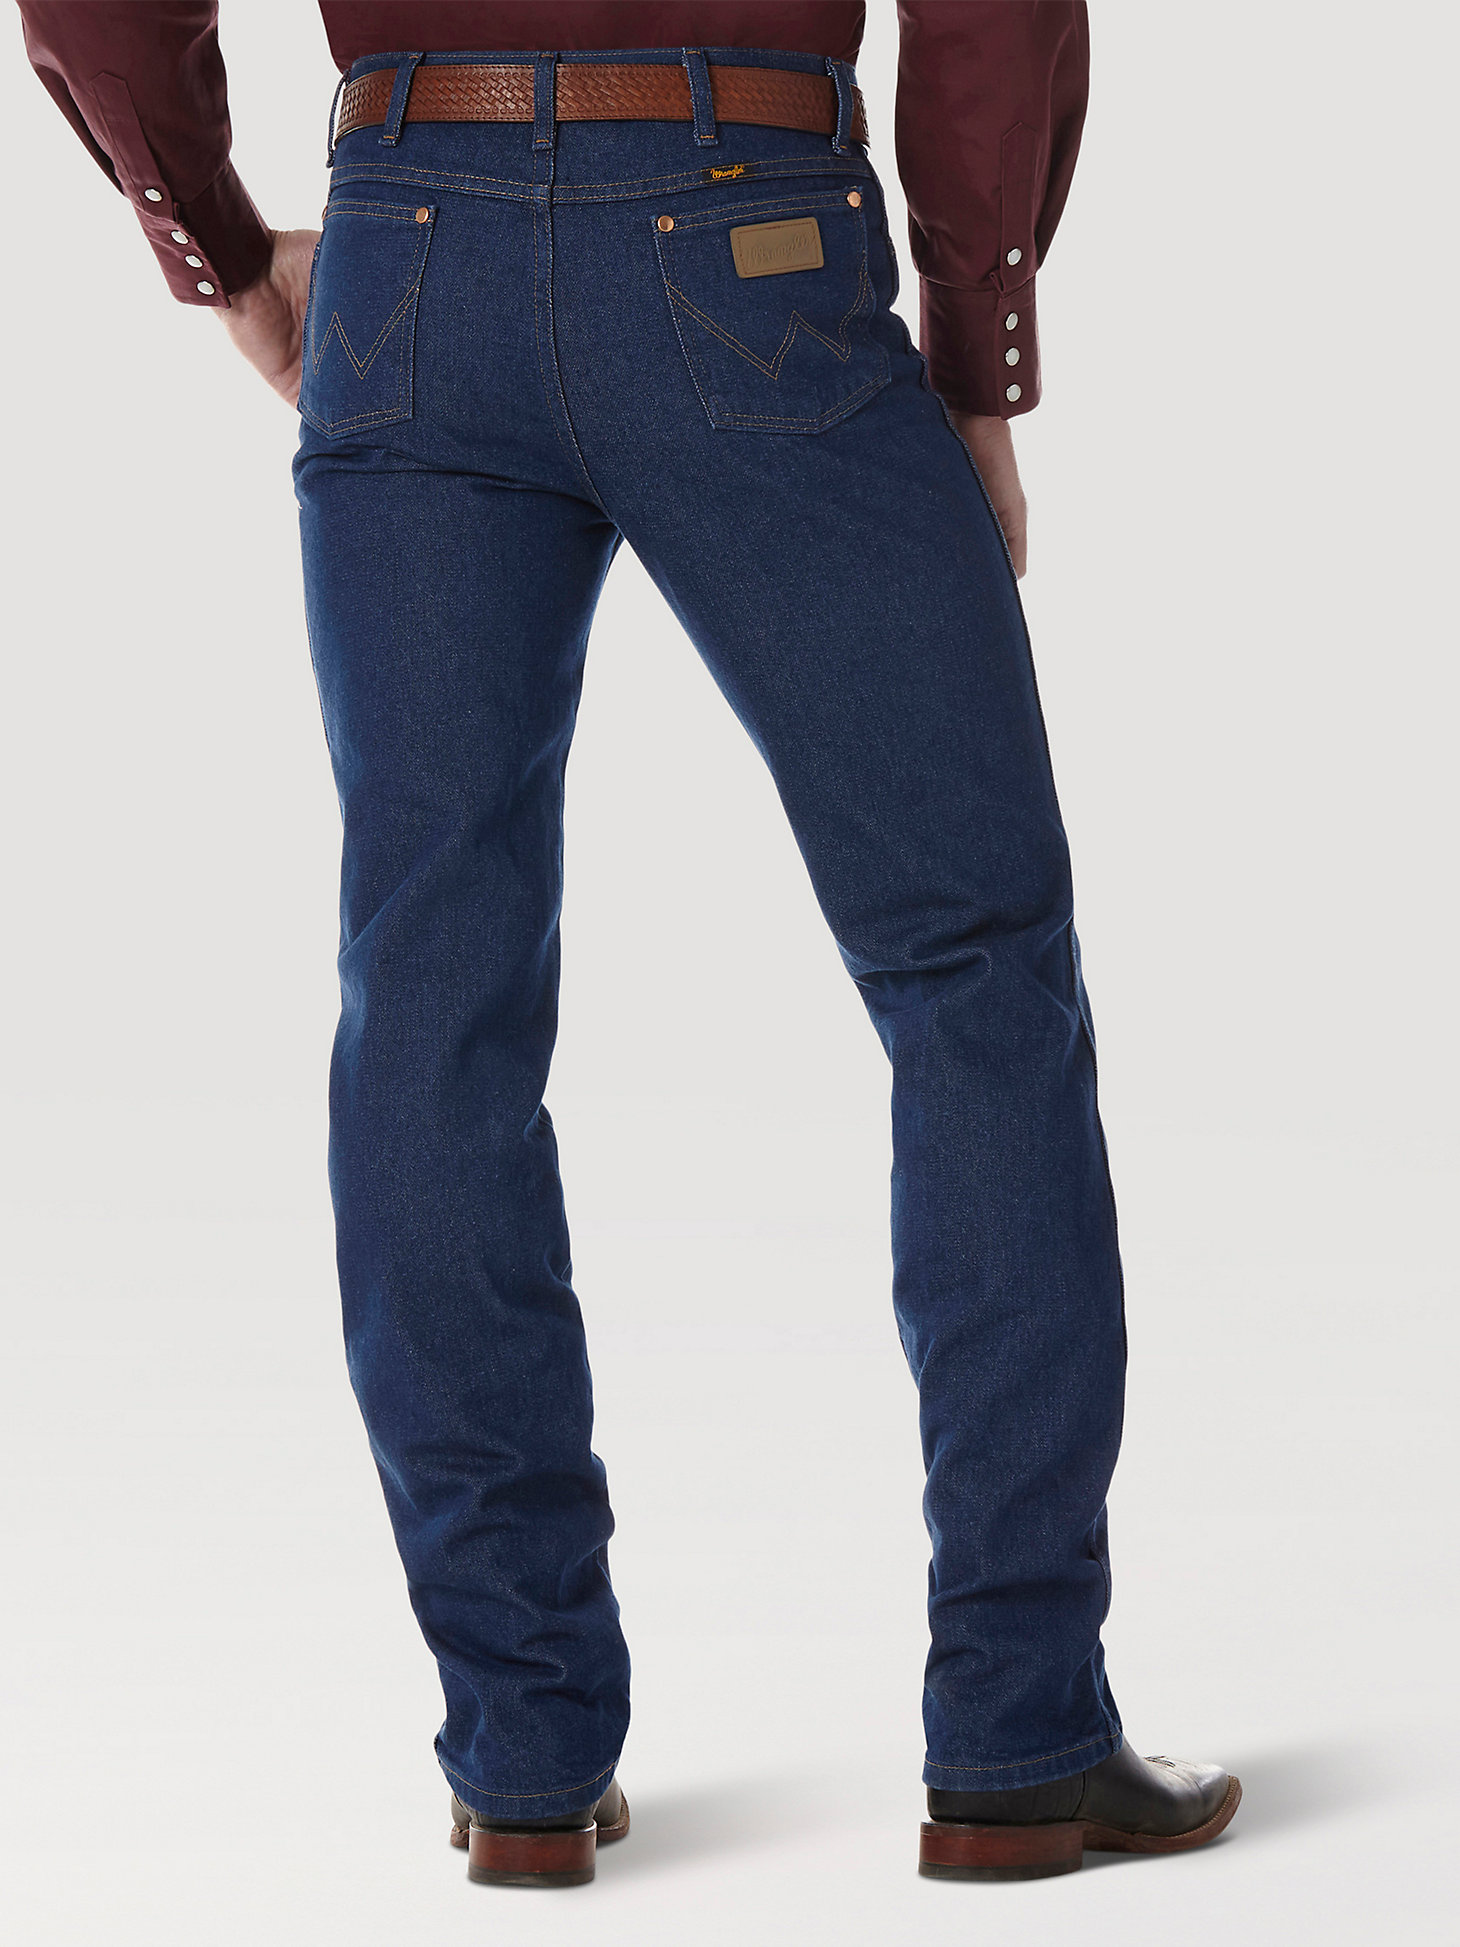 Wrangler® Cowboy Cut® Slim Fit Jean in Prewashed Indigo alternative view 2